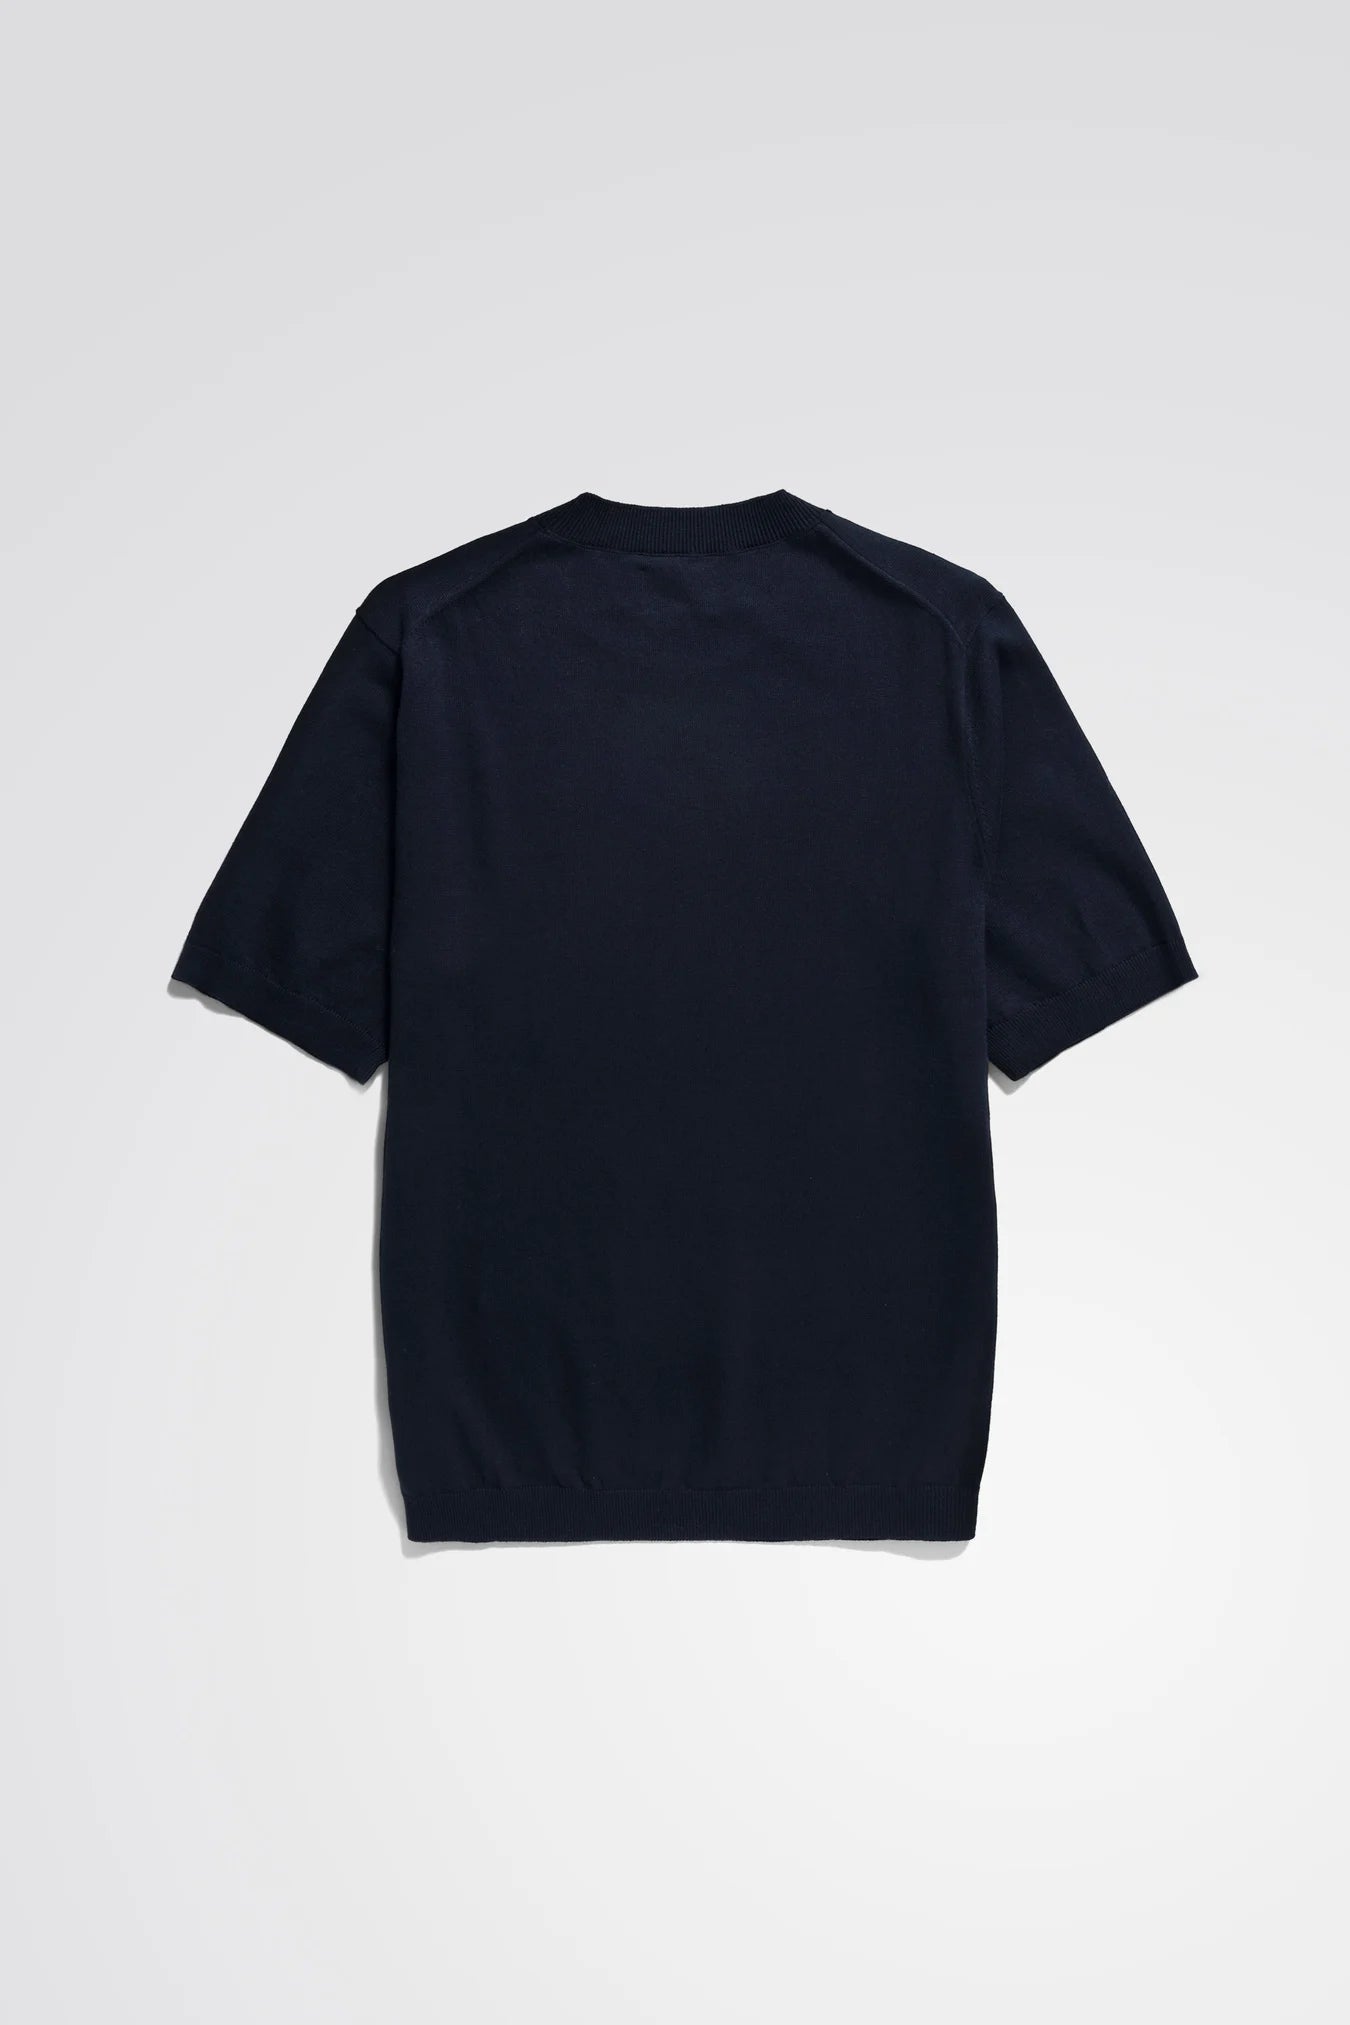 
                  
                    Rhys Cotton Linen T-Shirt - Dark Navy
                  
                